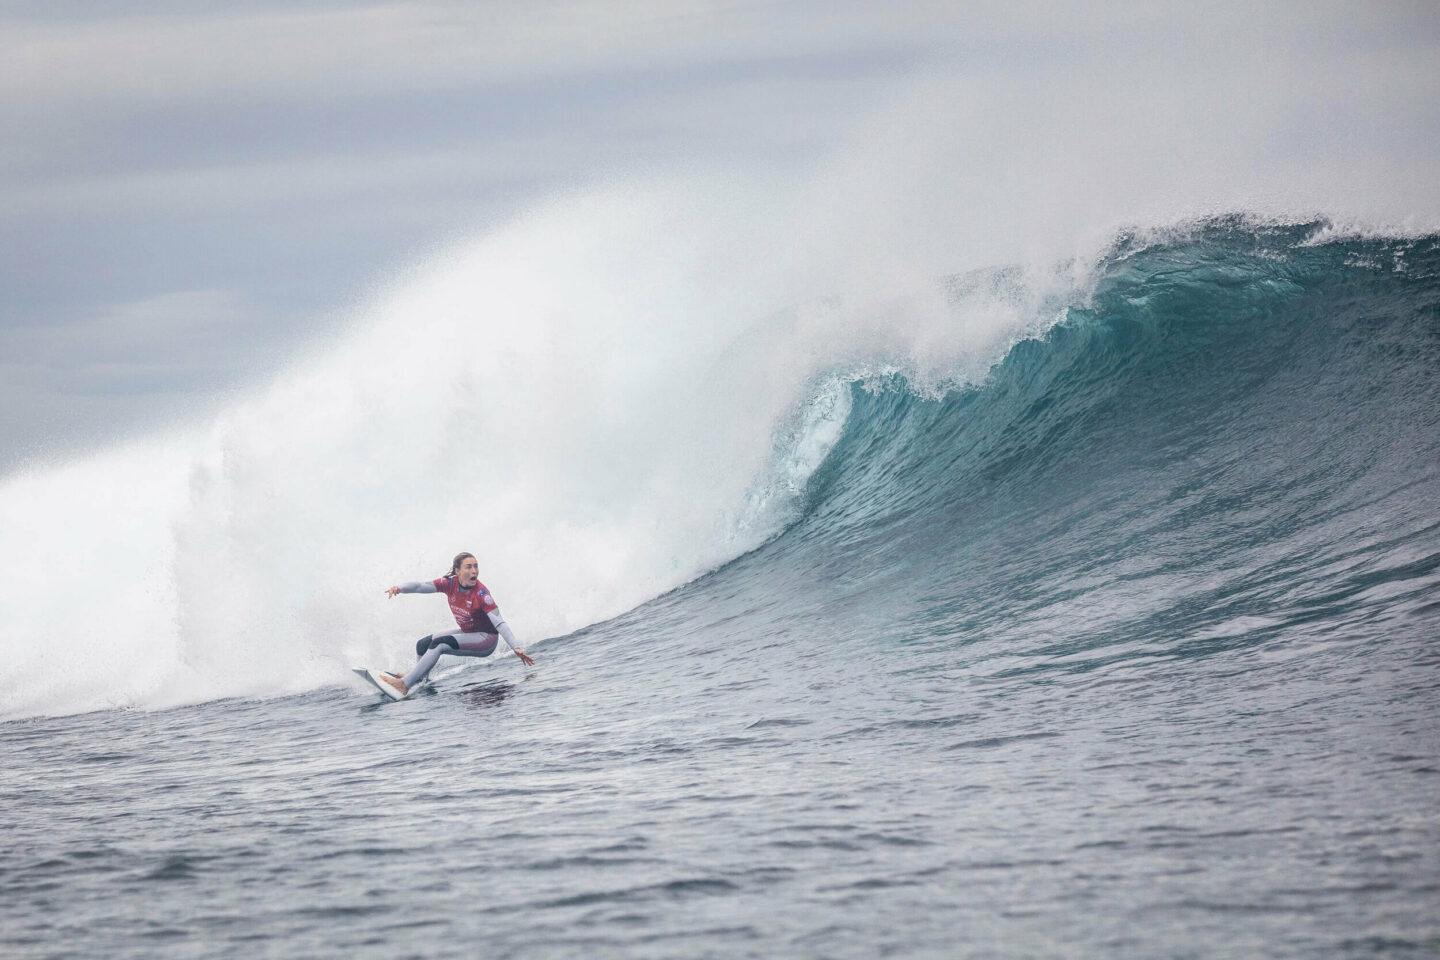 Nikki van Dijk riding a big surfboard in big waves